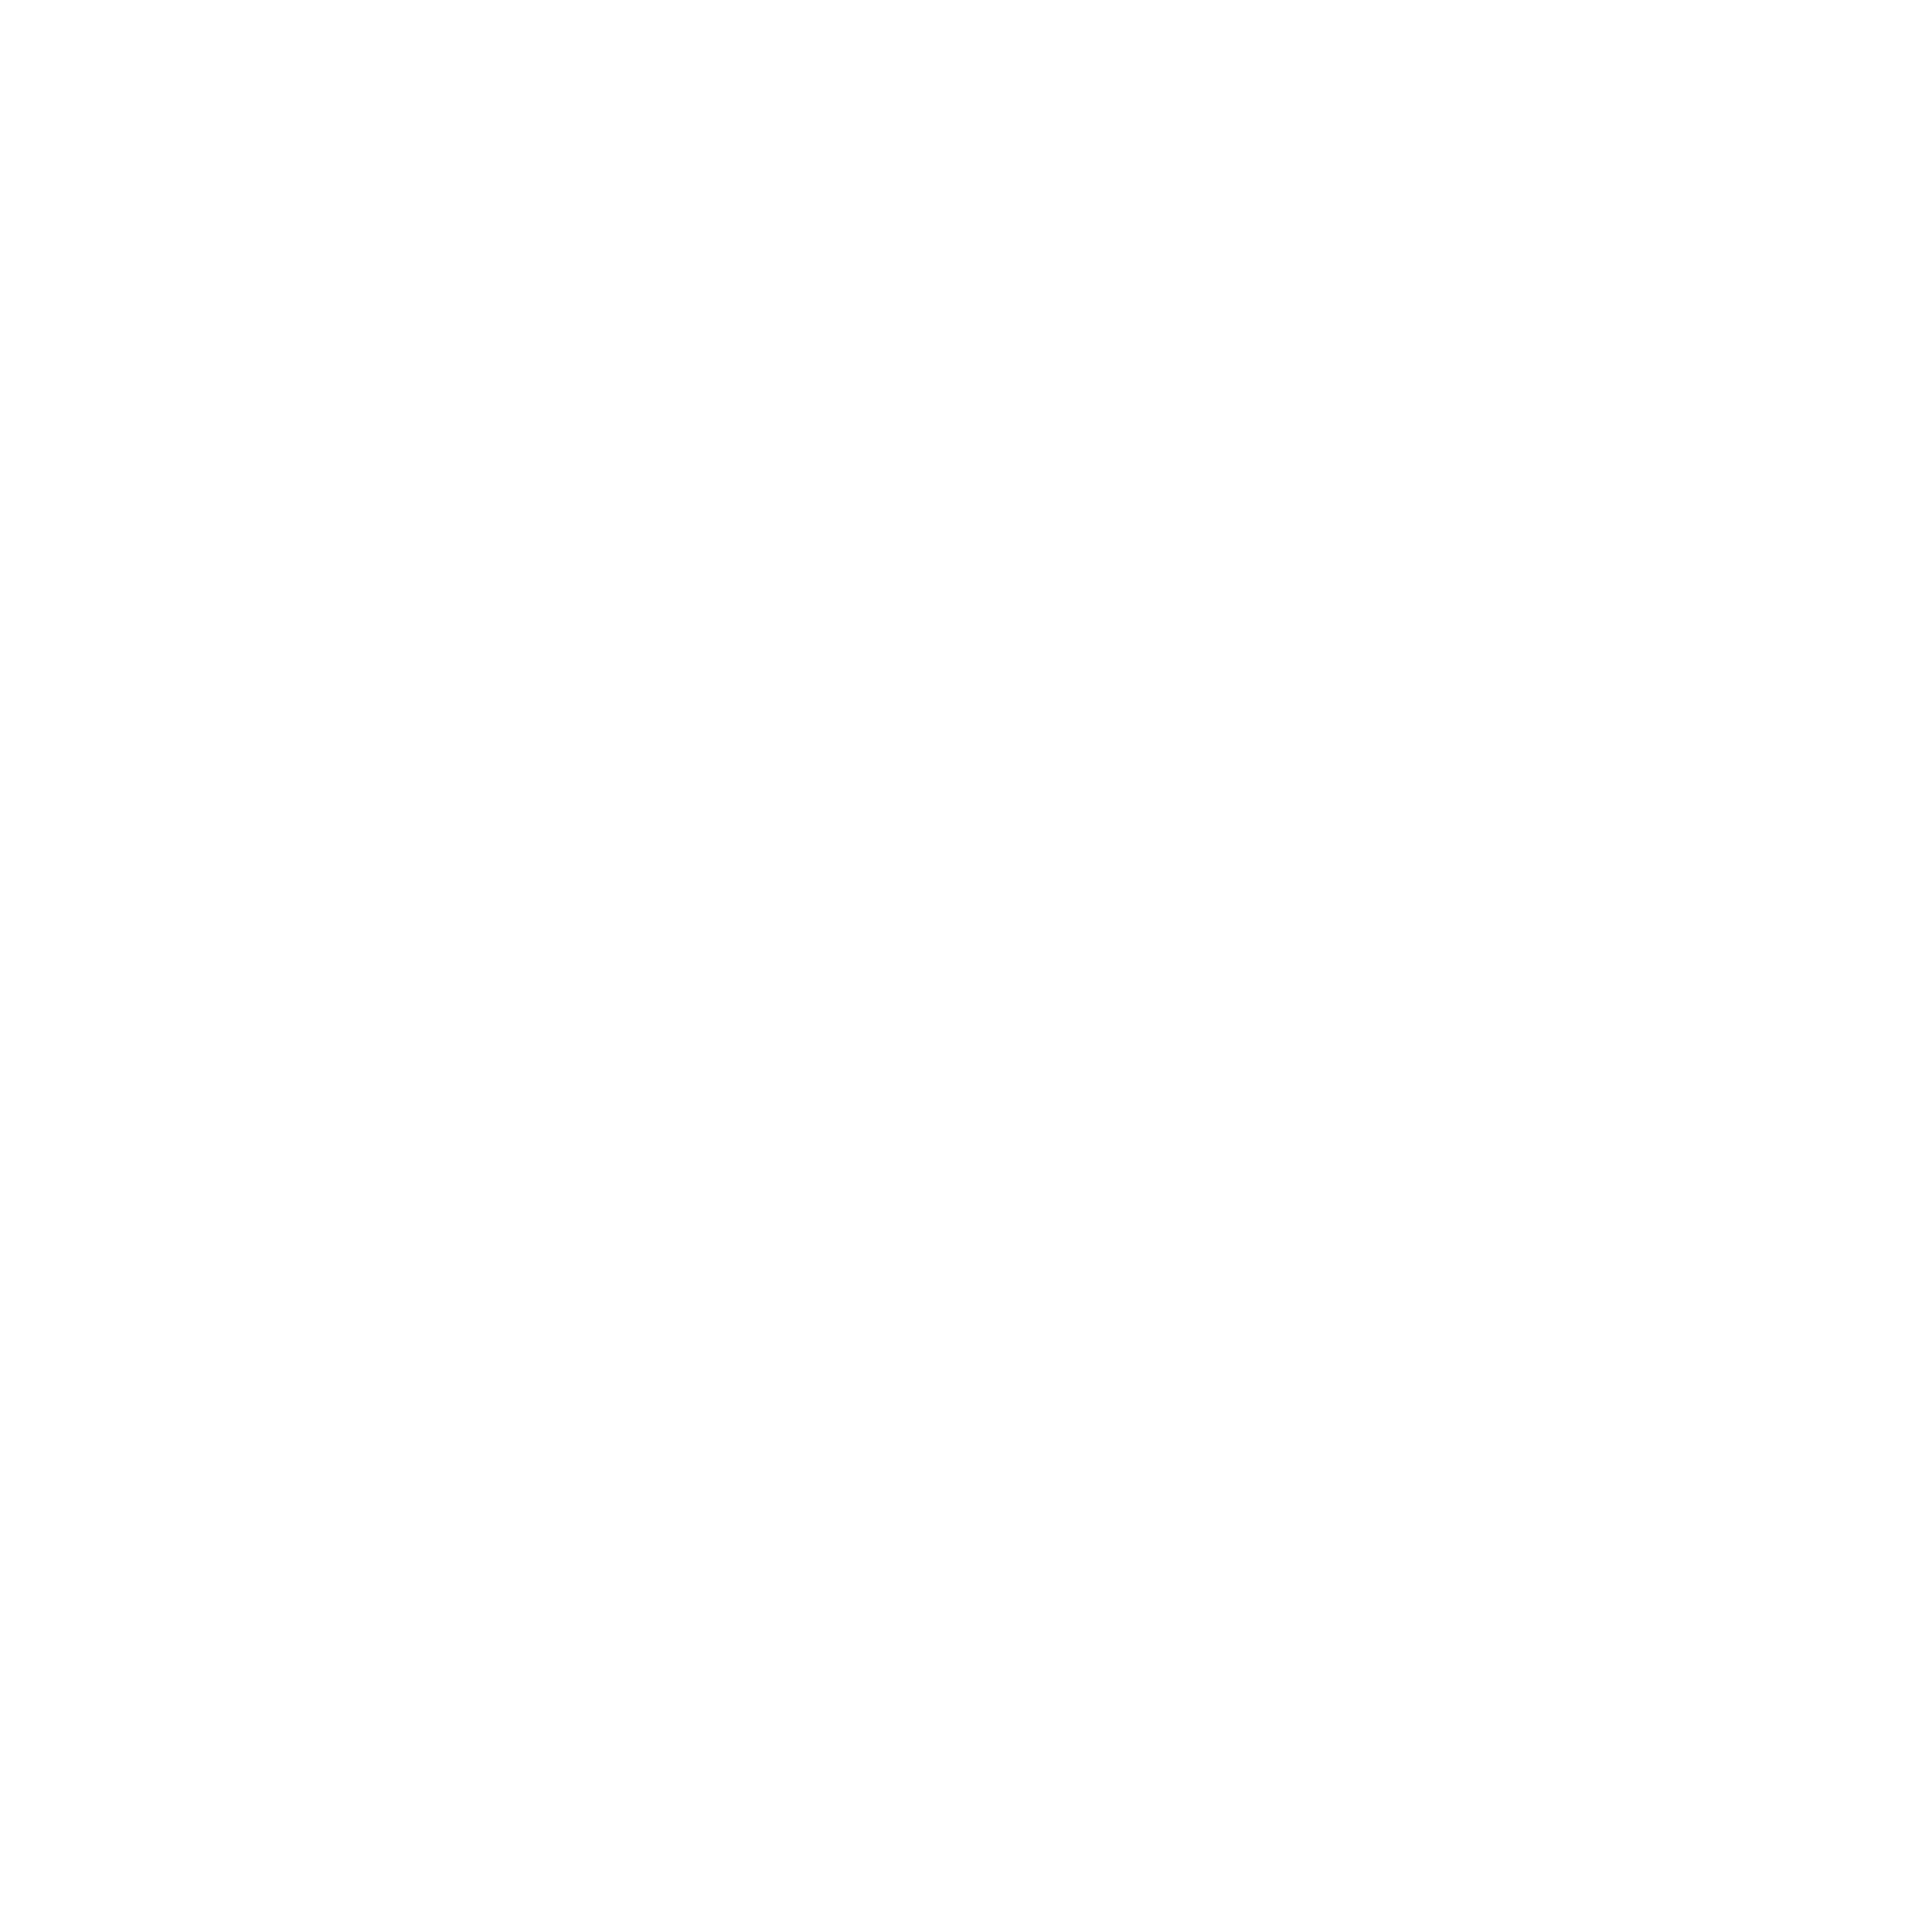 Pedro Merla